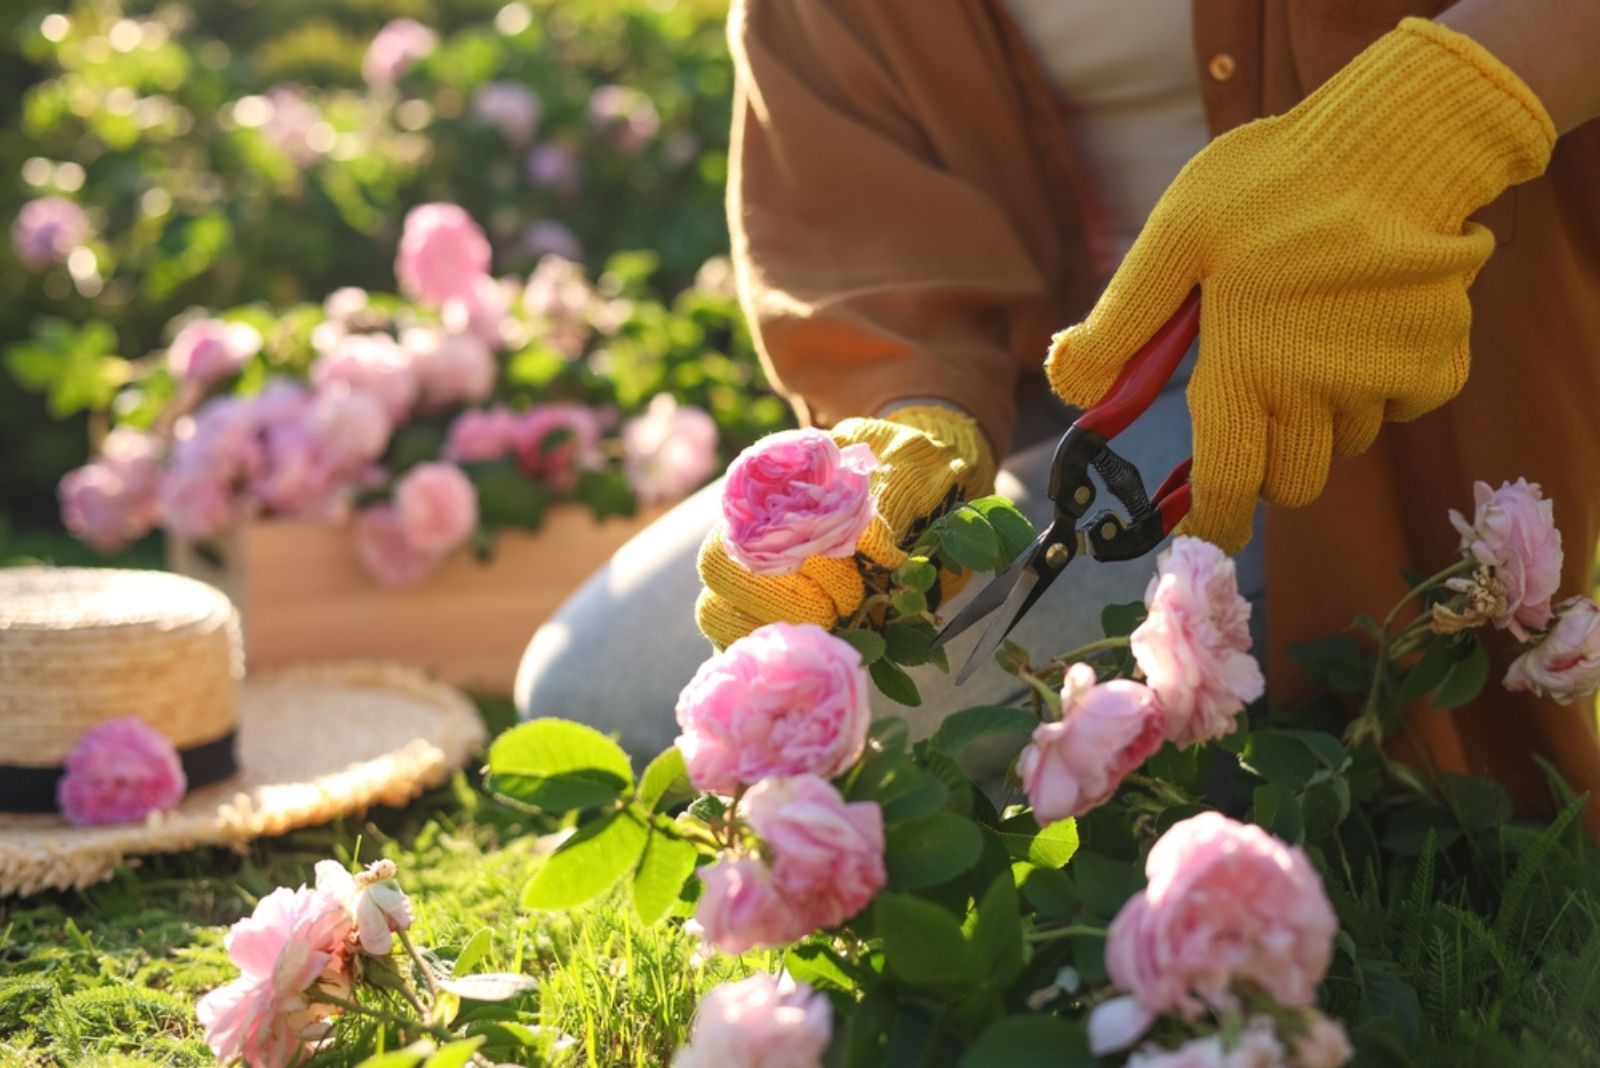 Woman pruning tea rose bush in garden